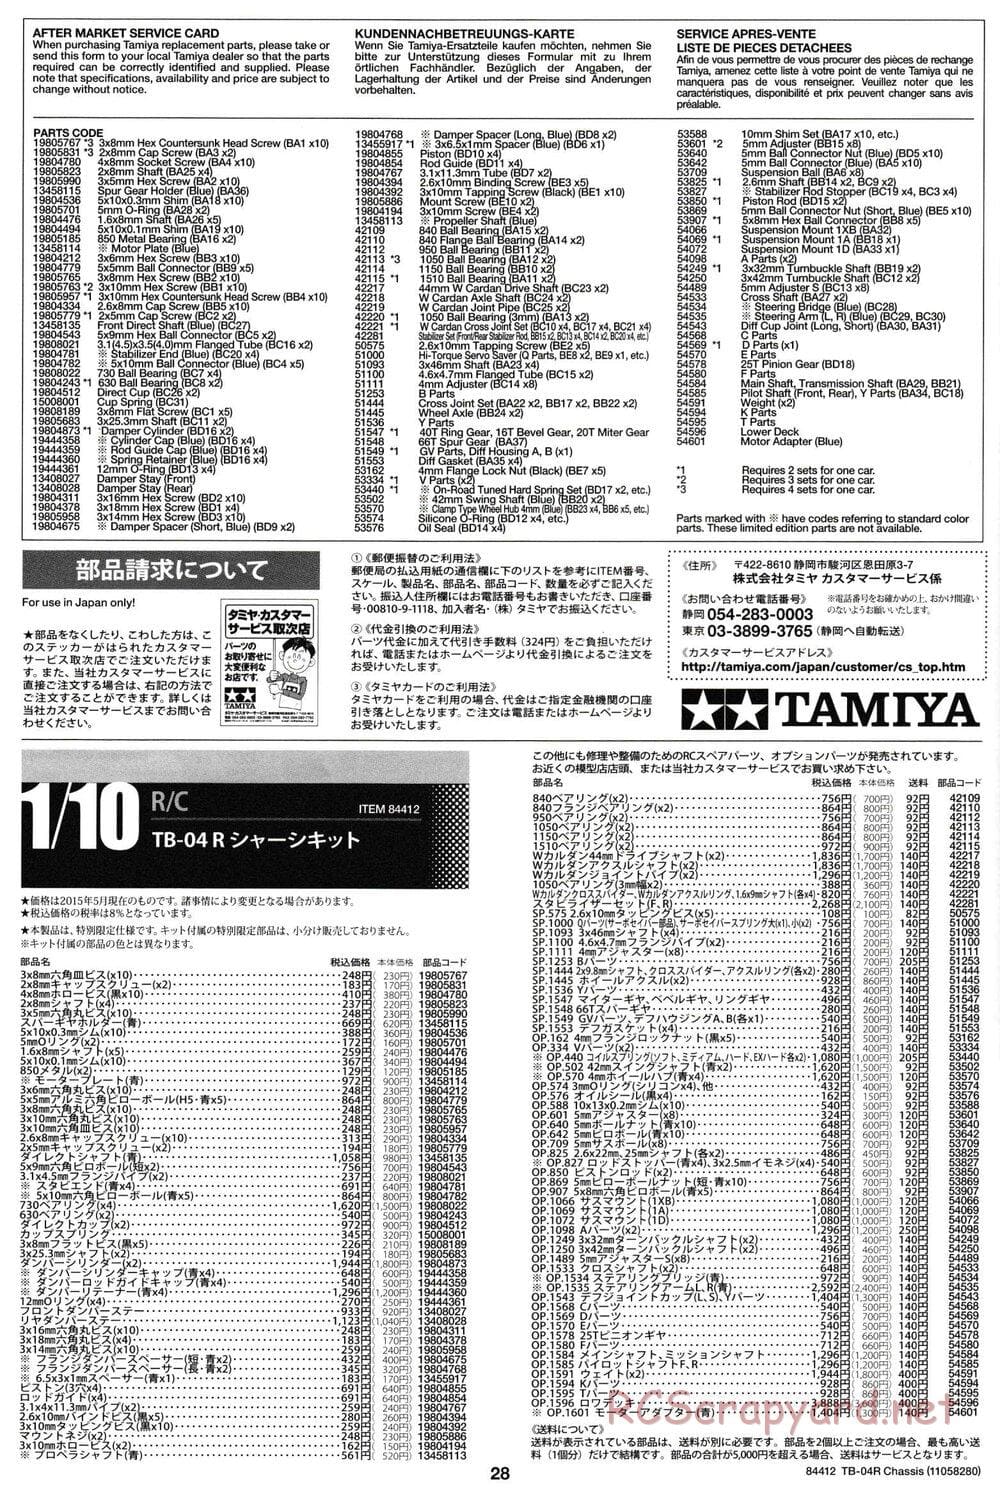 Tamiya - TB-04R Chassis Chassis - Manual - Page 28